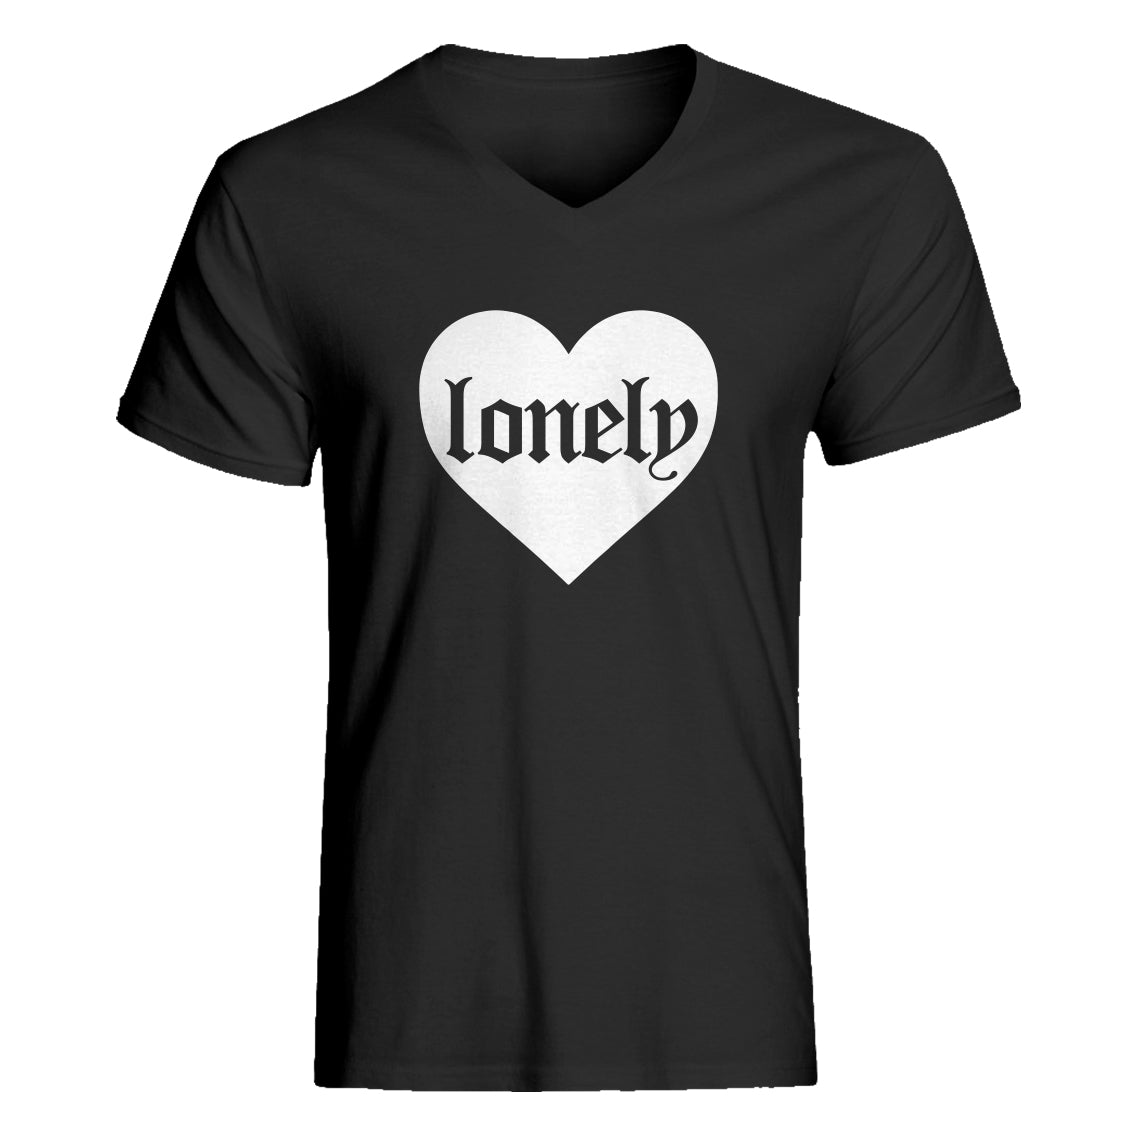 Mens Lonely V-Neck T-shirt